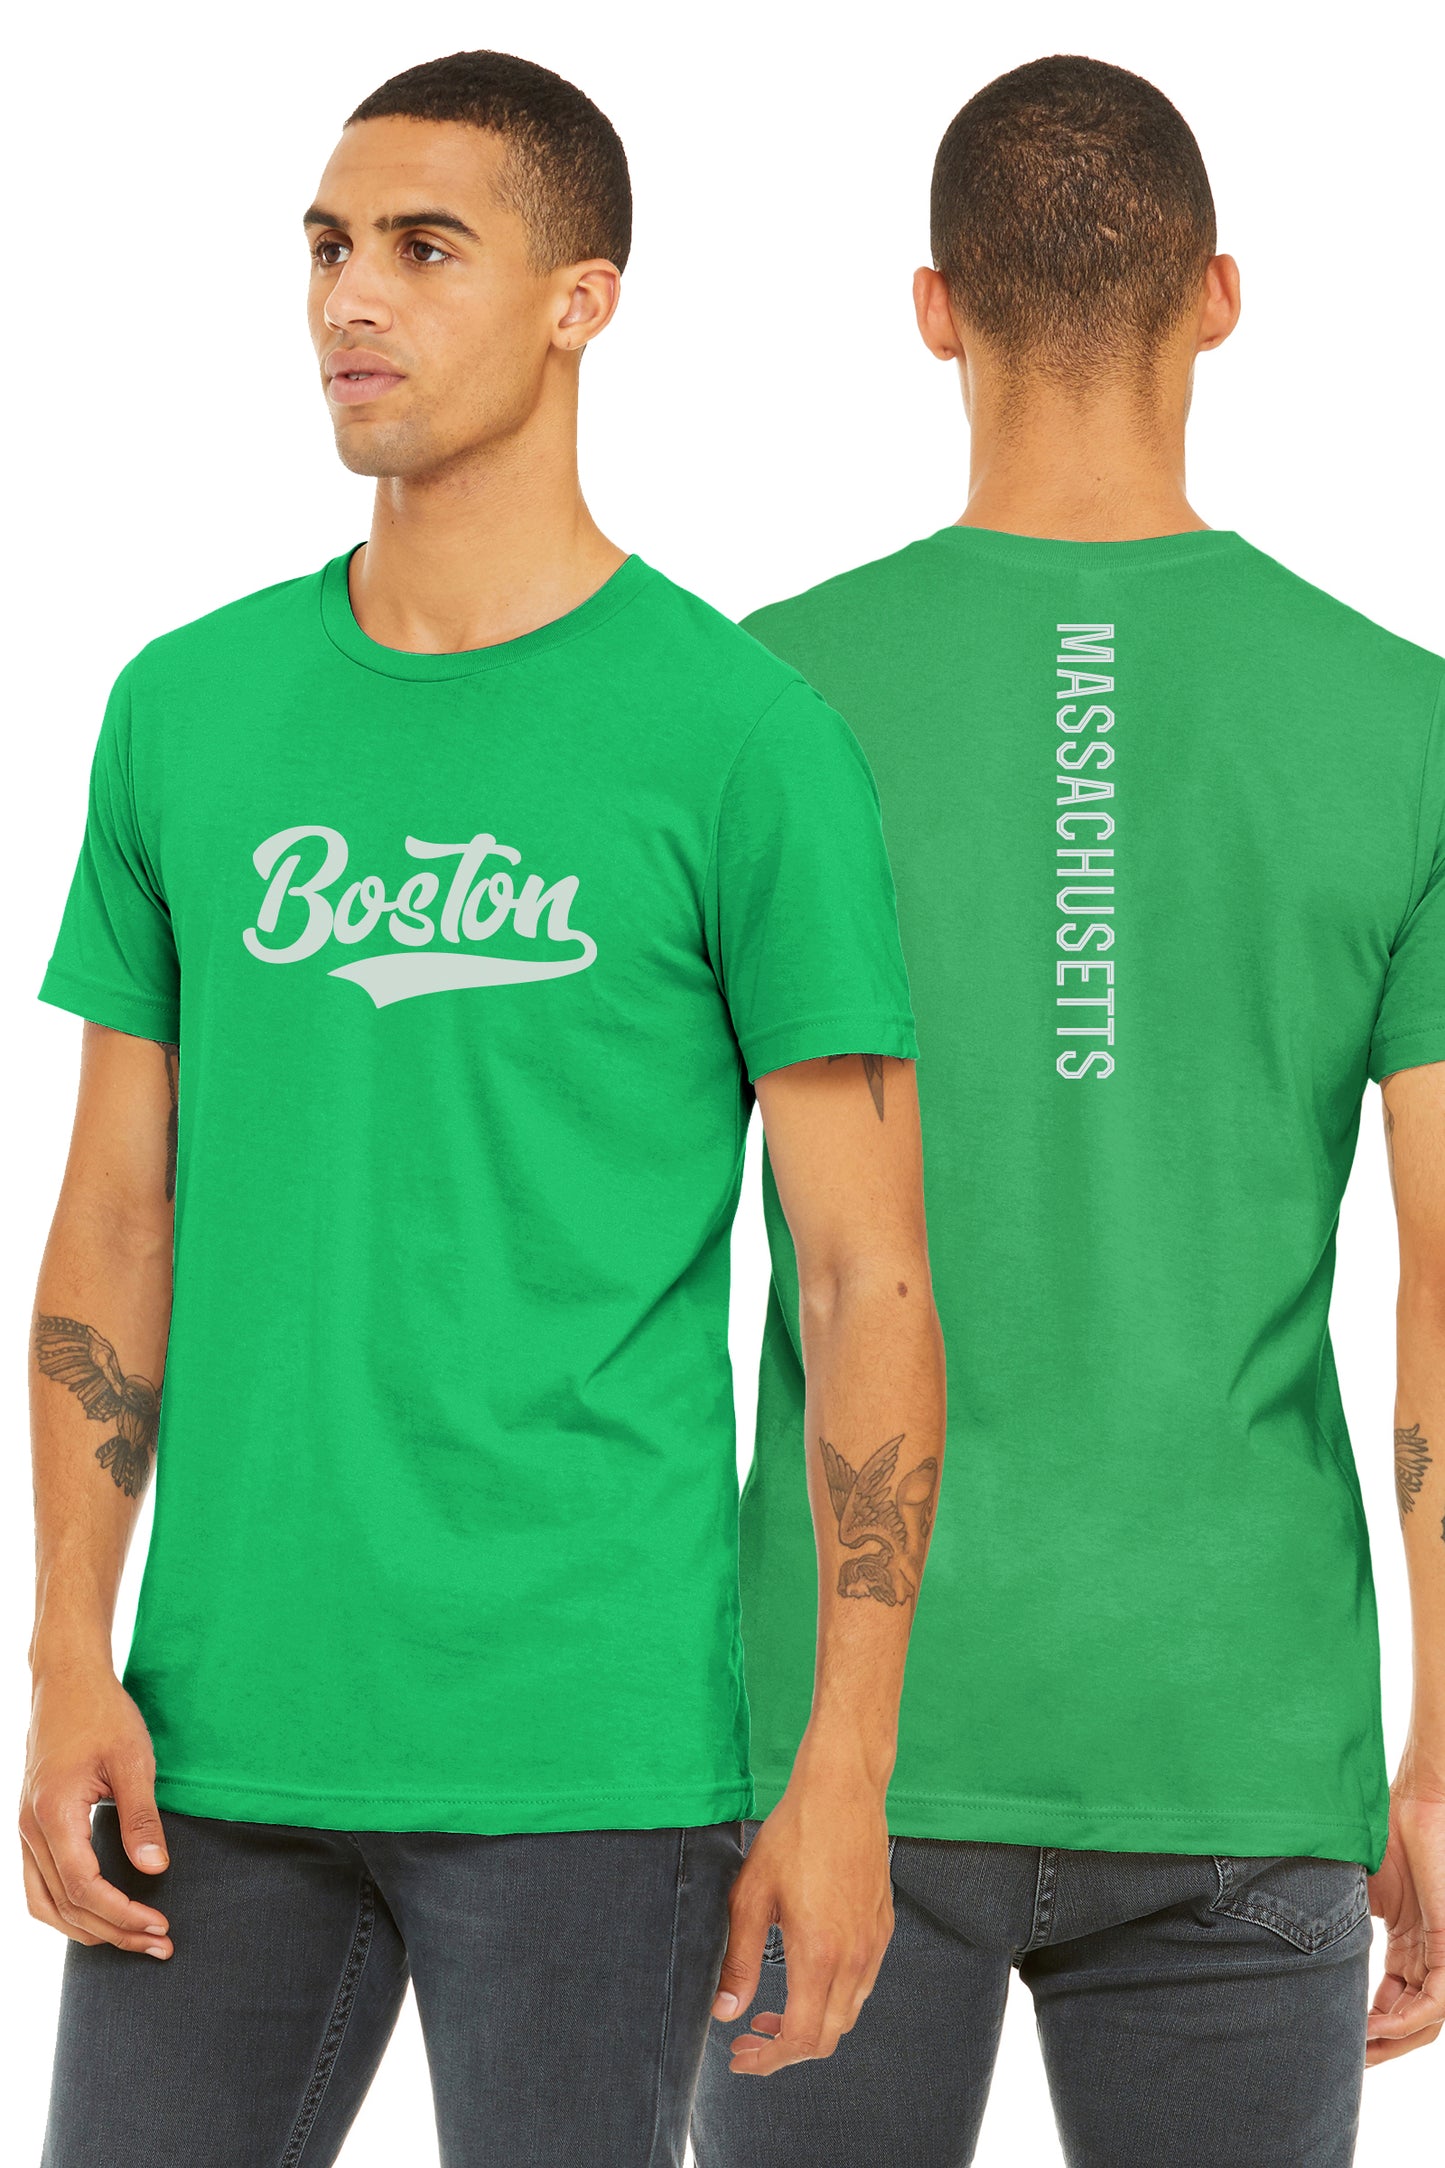 Daxton Adult Unisex Tshirt Boston Script with Massachusett Vertical on the Back